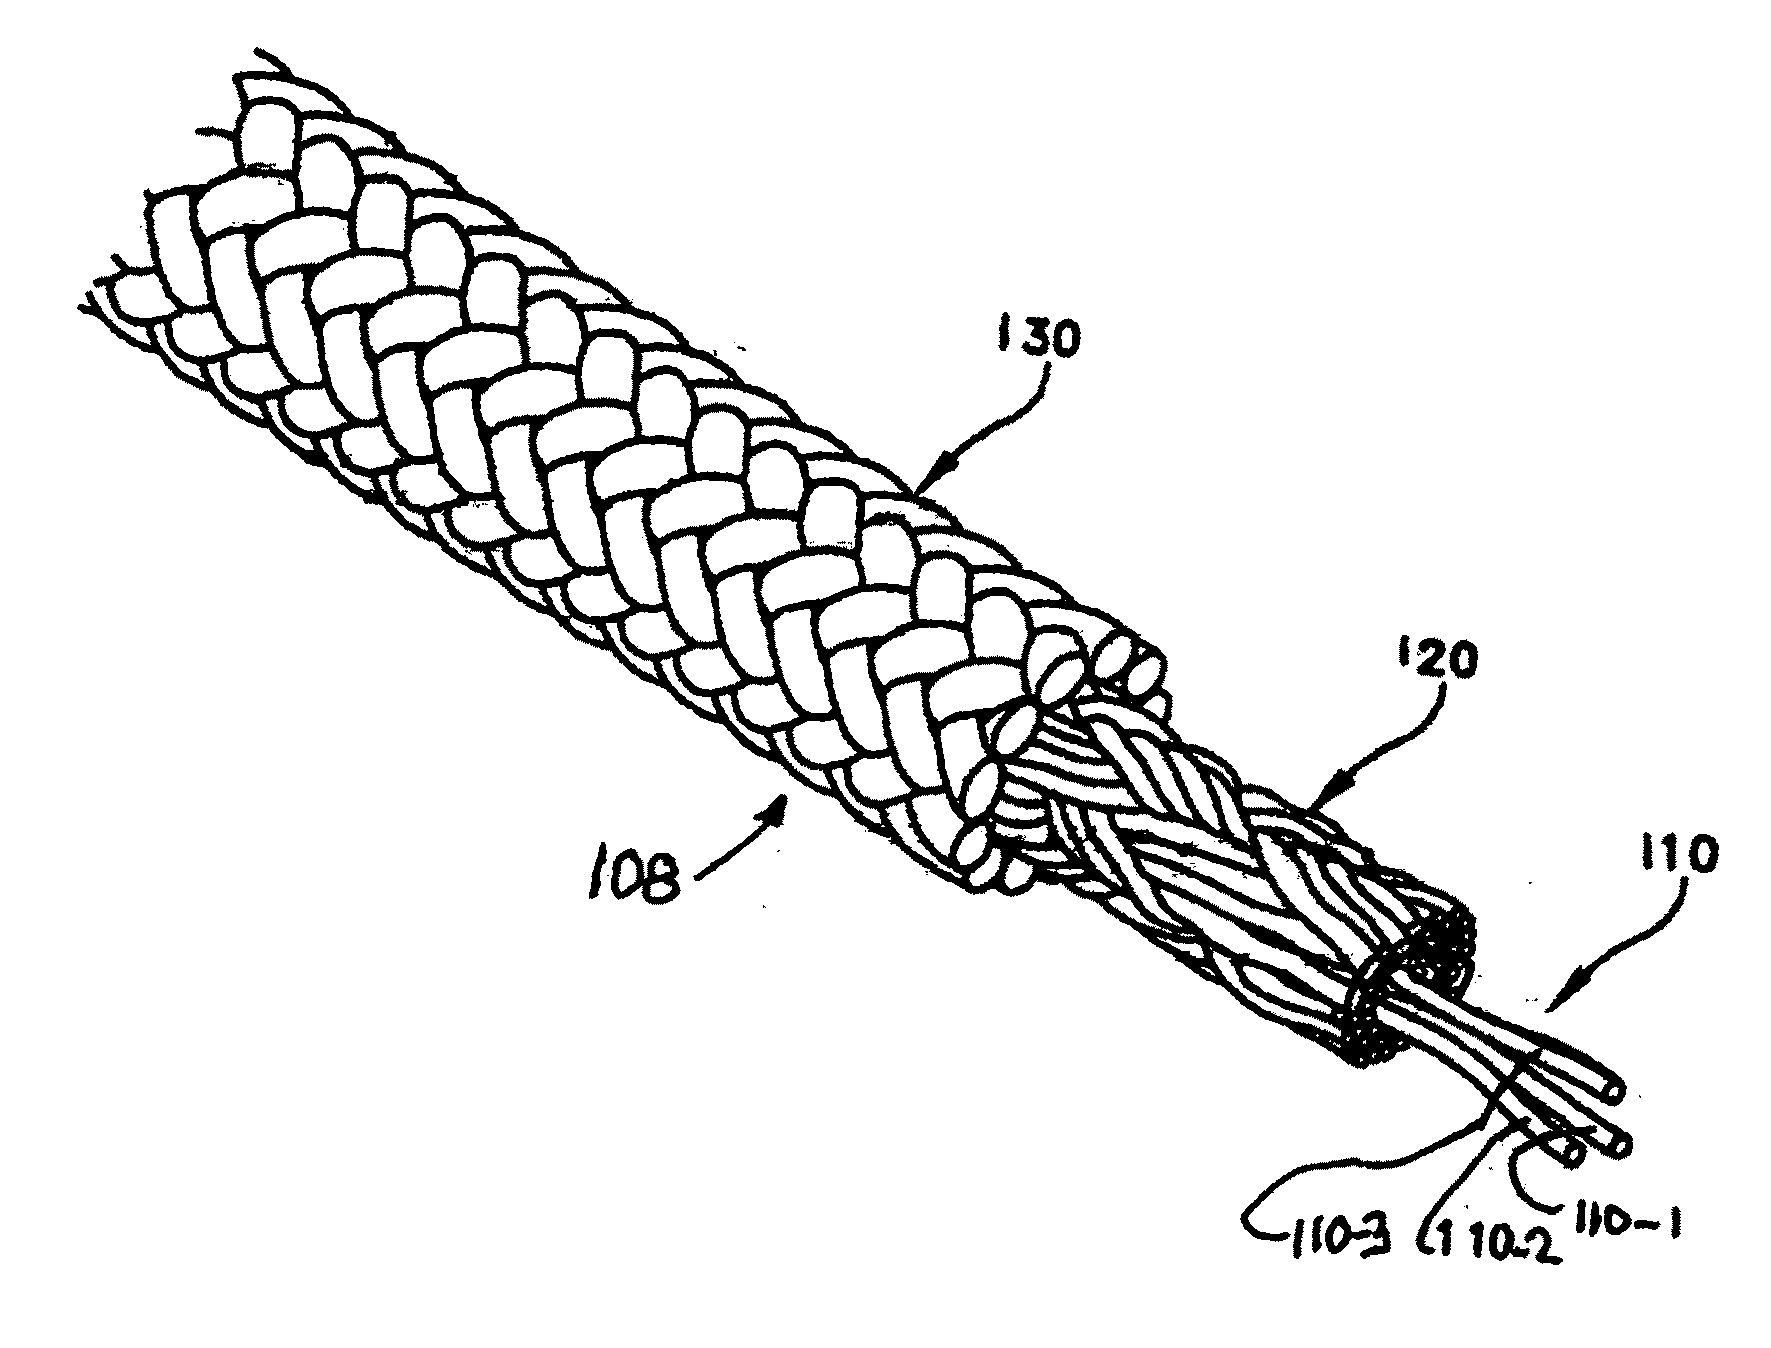 Arborist's climbing rope